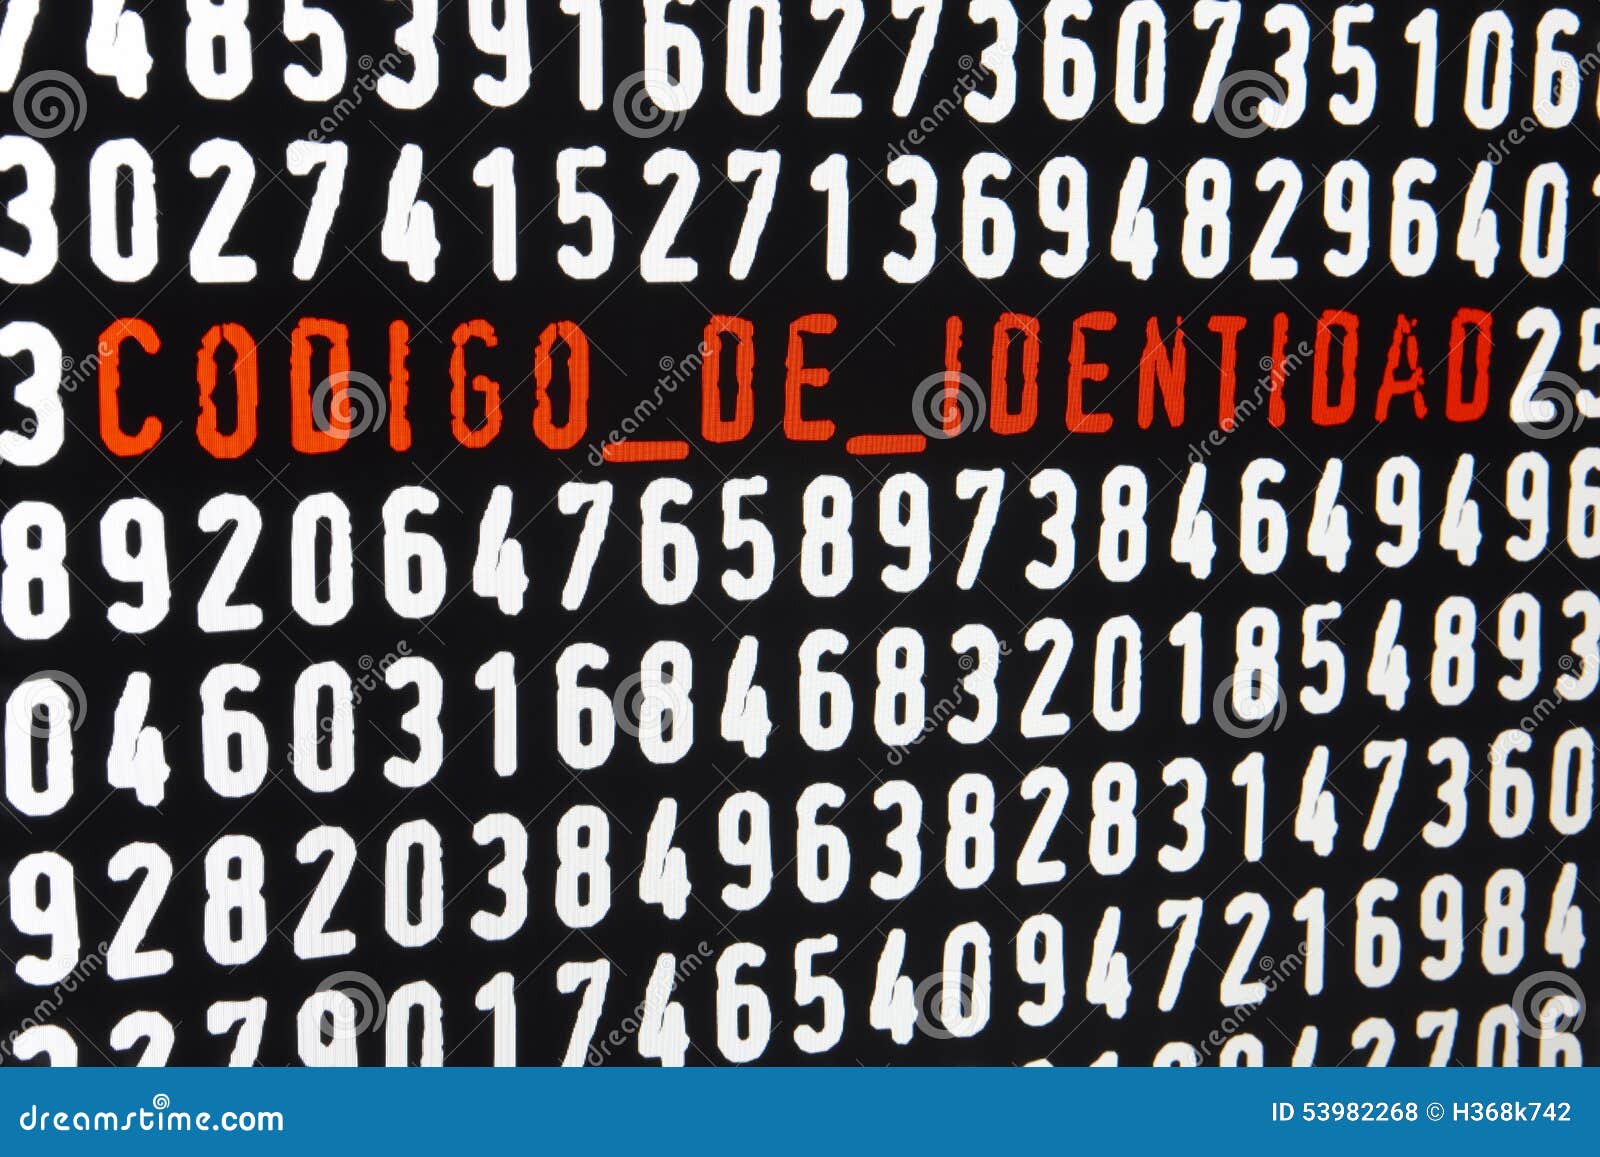 computer screen with codigo de identidad text on black background